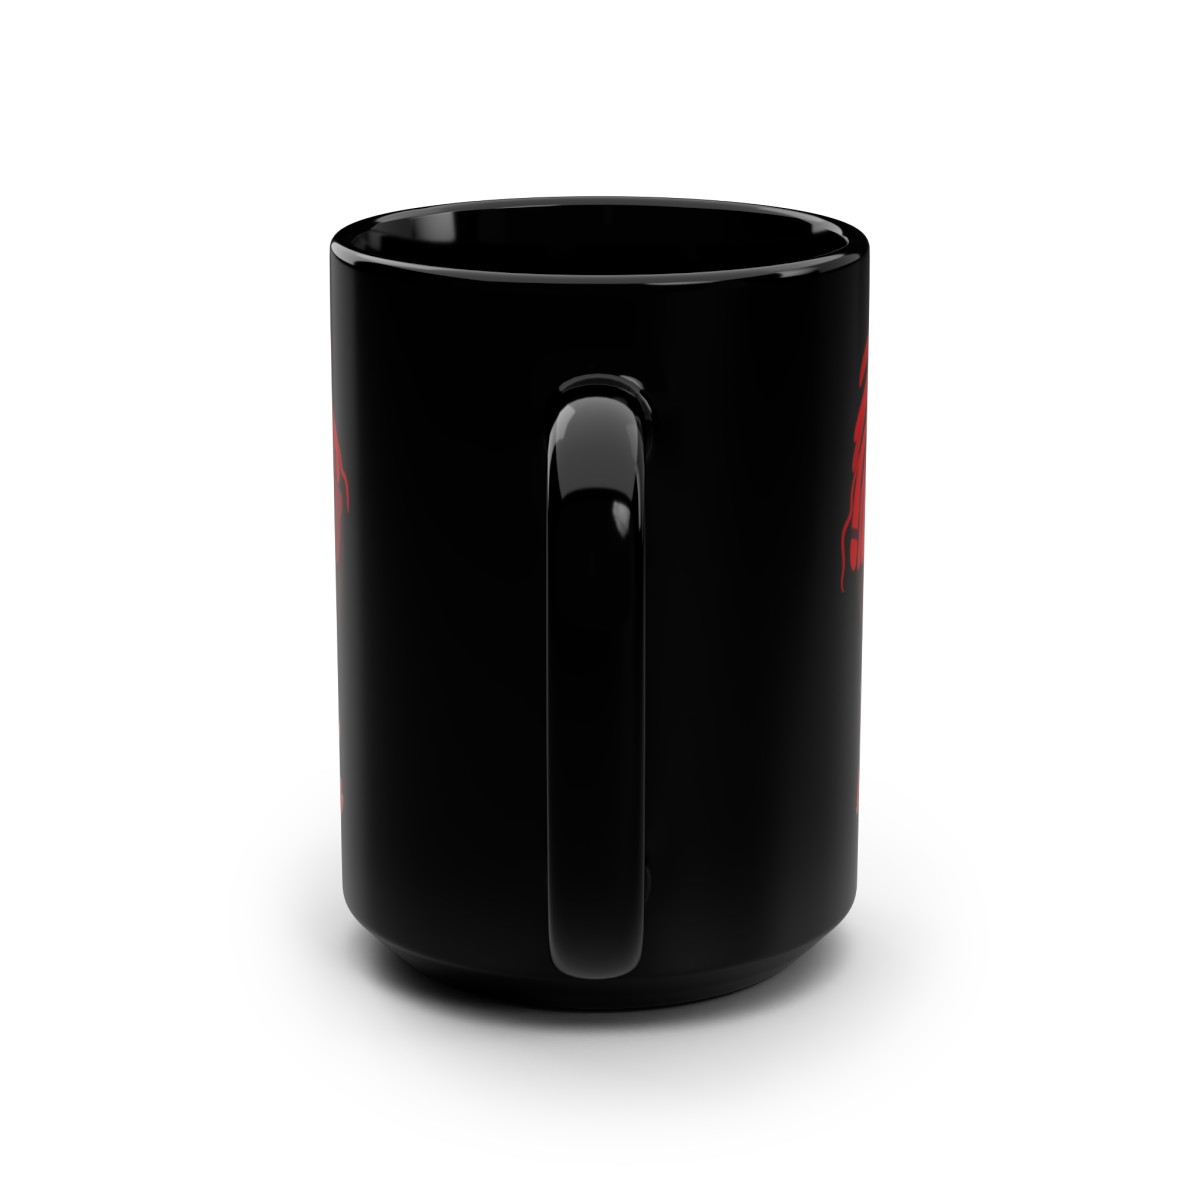 Titan In The Morning Black Mug, 15oz product thumbnail image